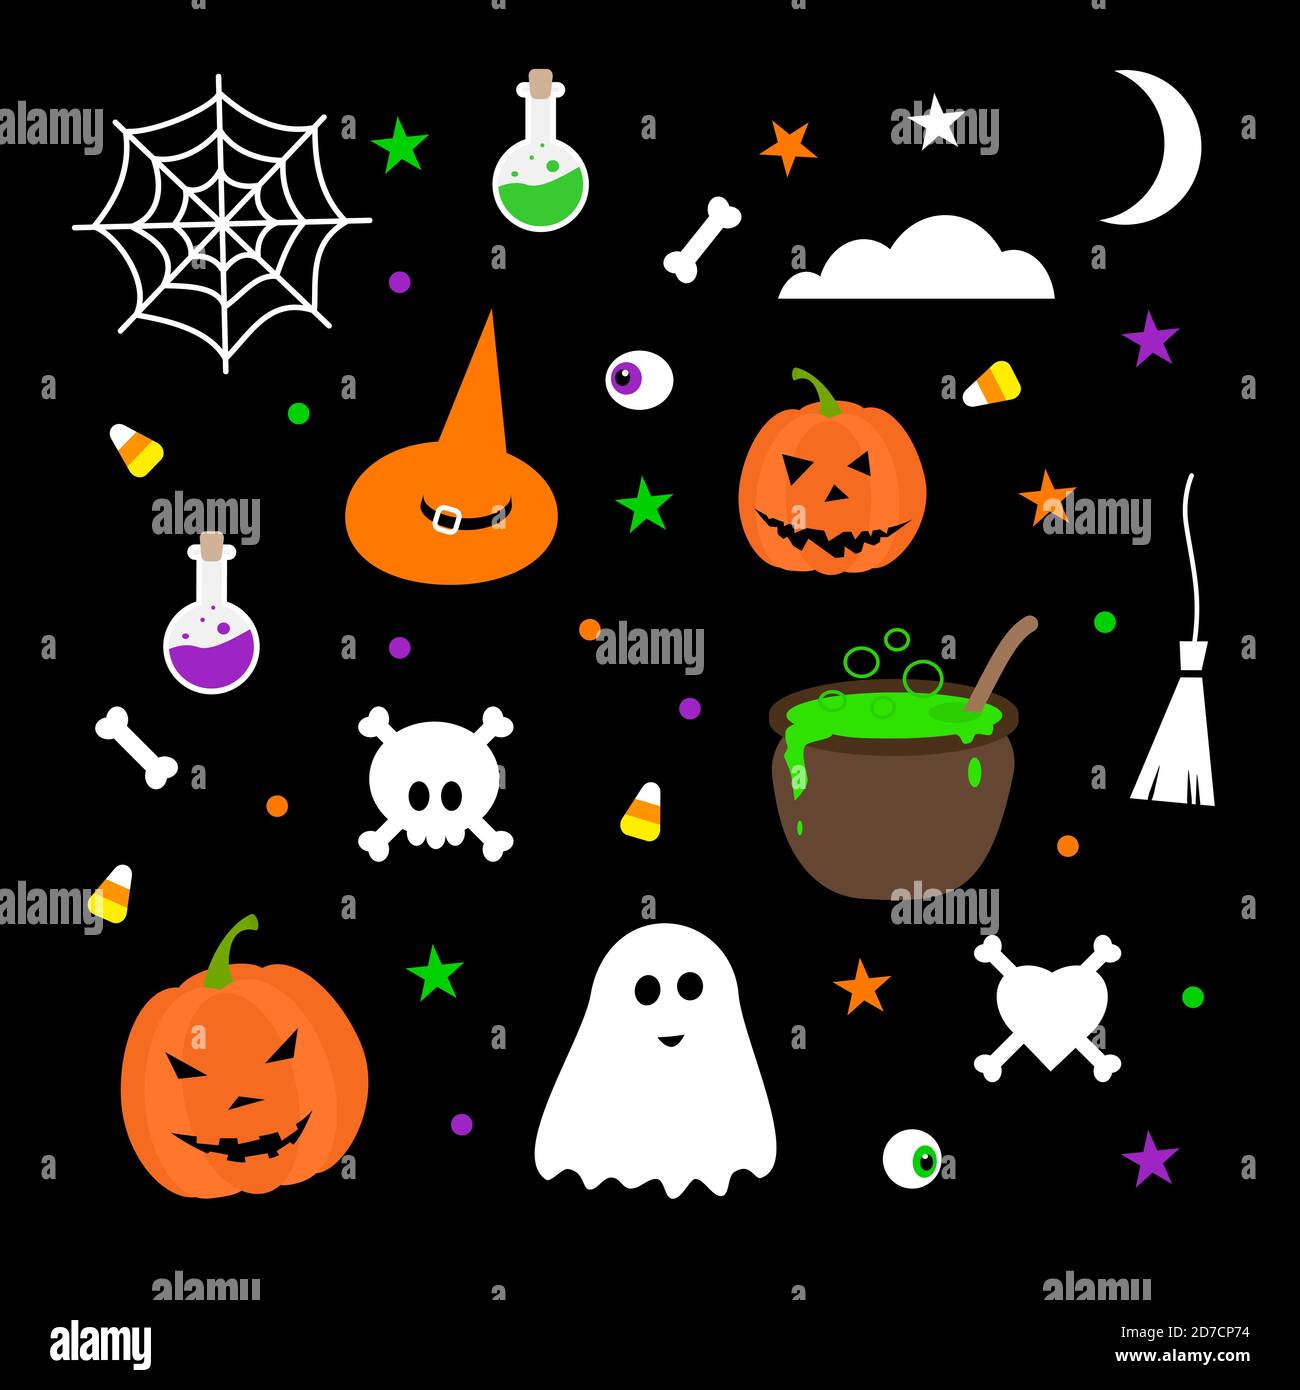 Happy Halloween elements set - brooms spider web skull bones graves, fence, pumpkin, moon, cloud, bat, spider, witch hat. Stock vector illustration on Stock Vector